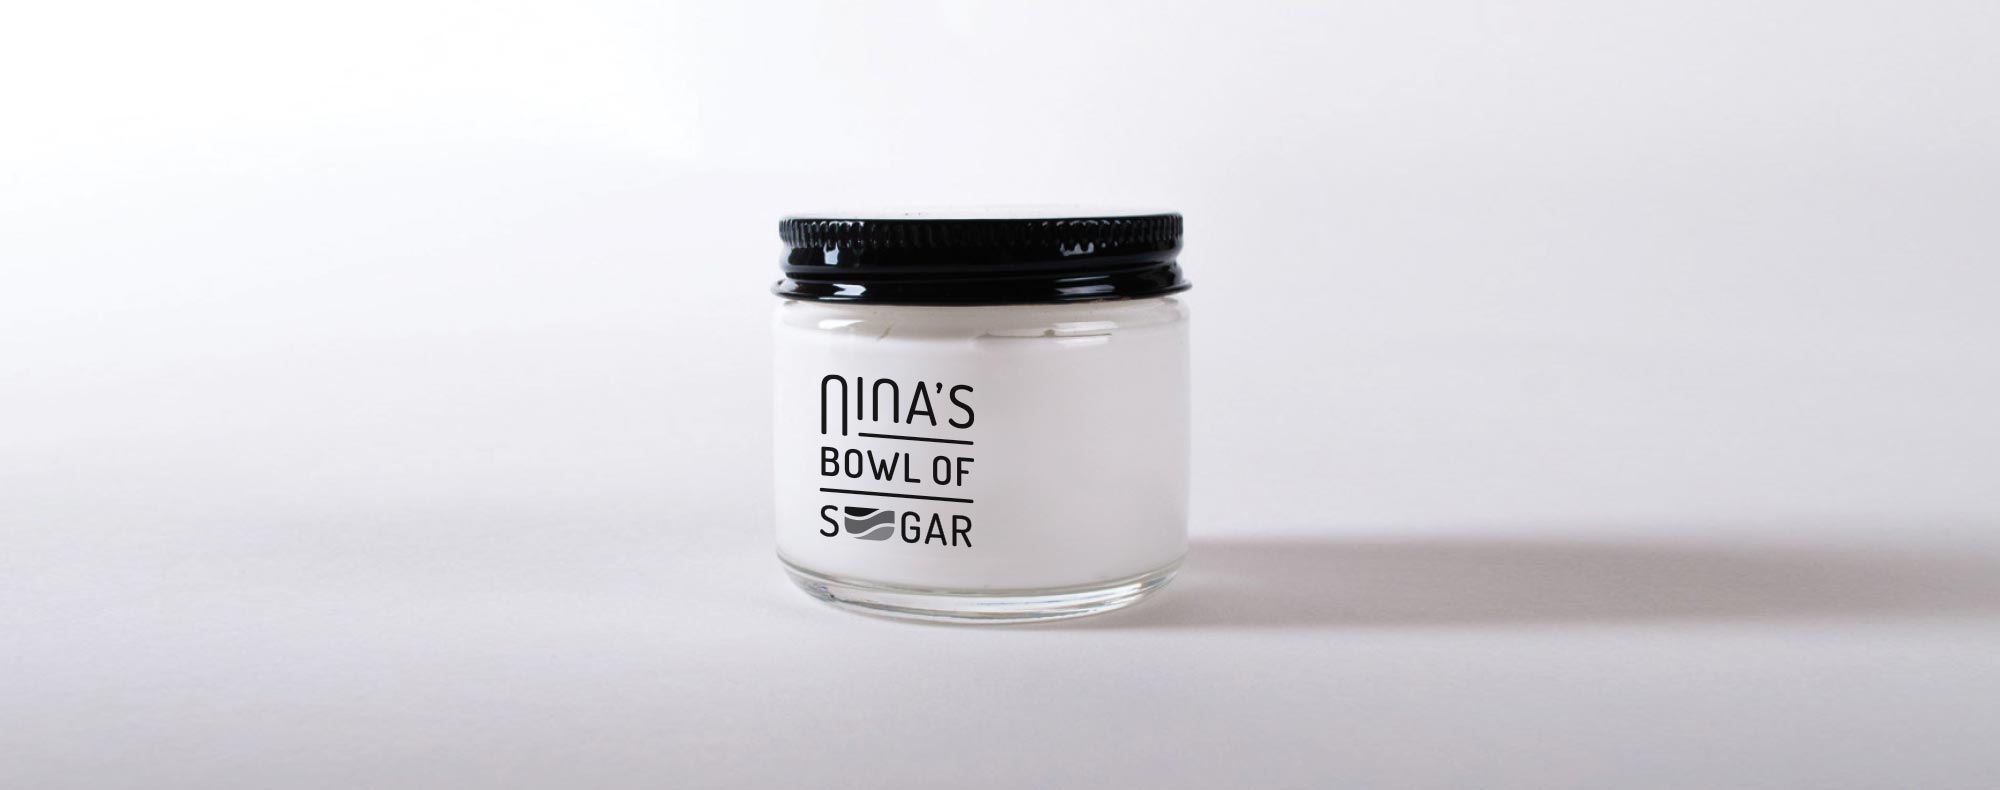 ninas-bowl-of-sugar_packaging